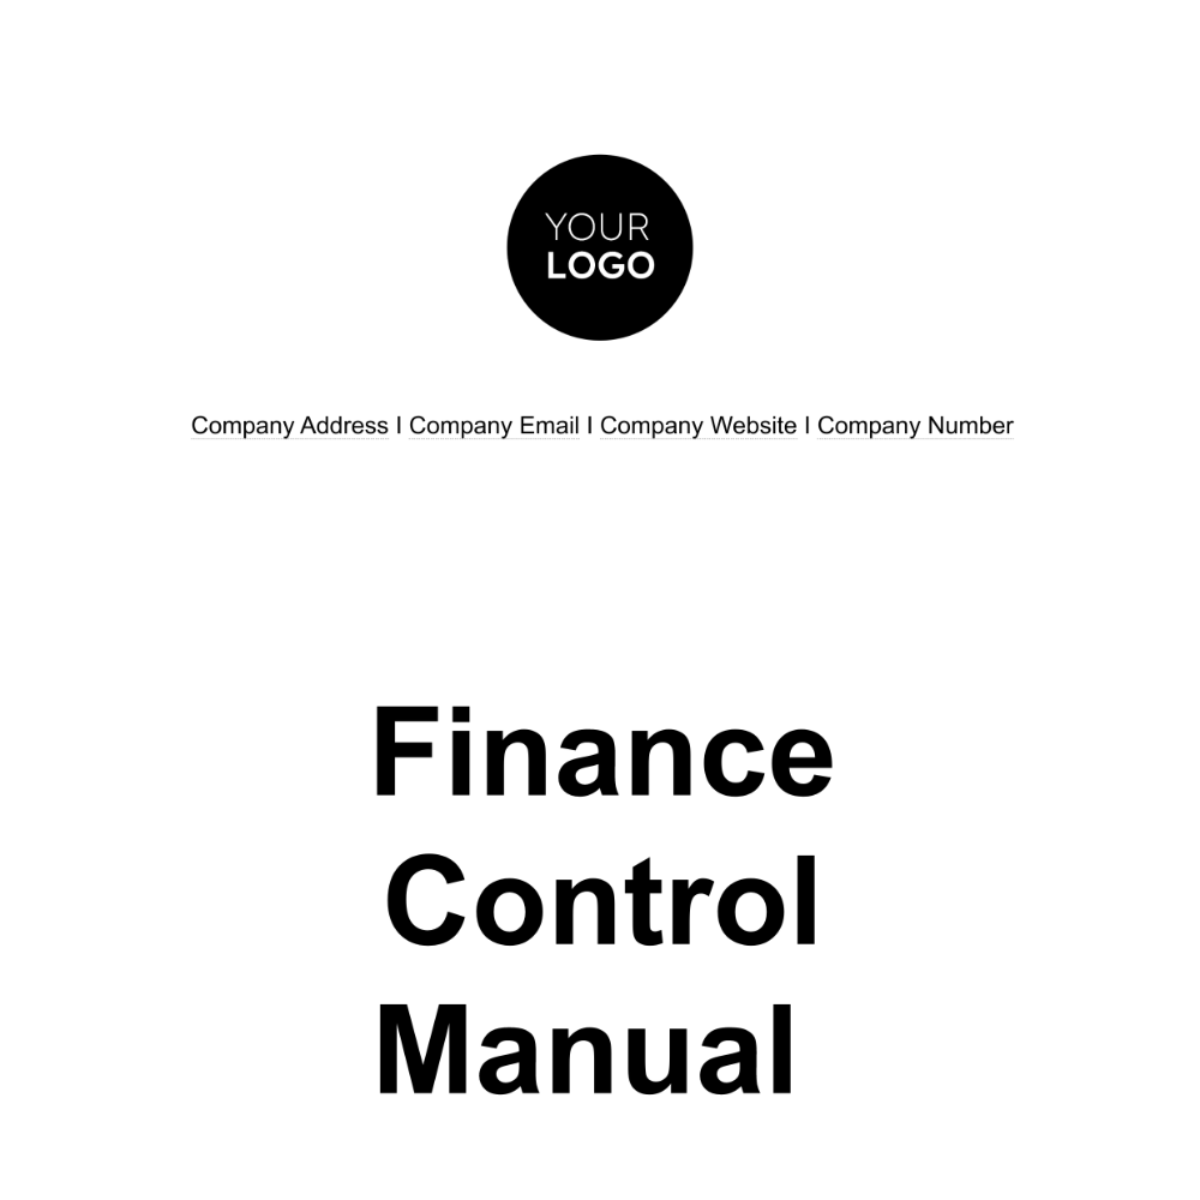 Finance Control Manual Template